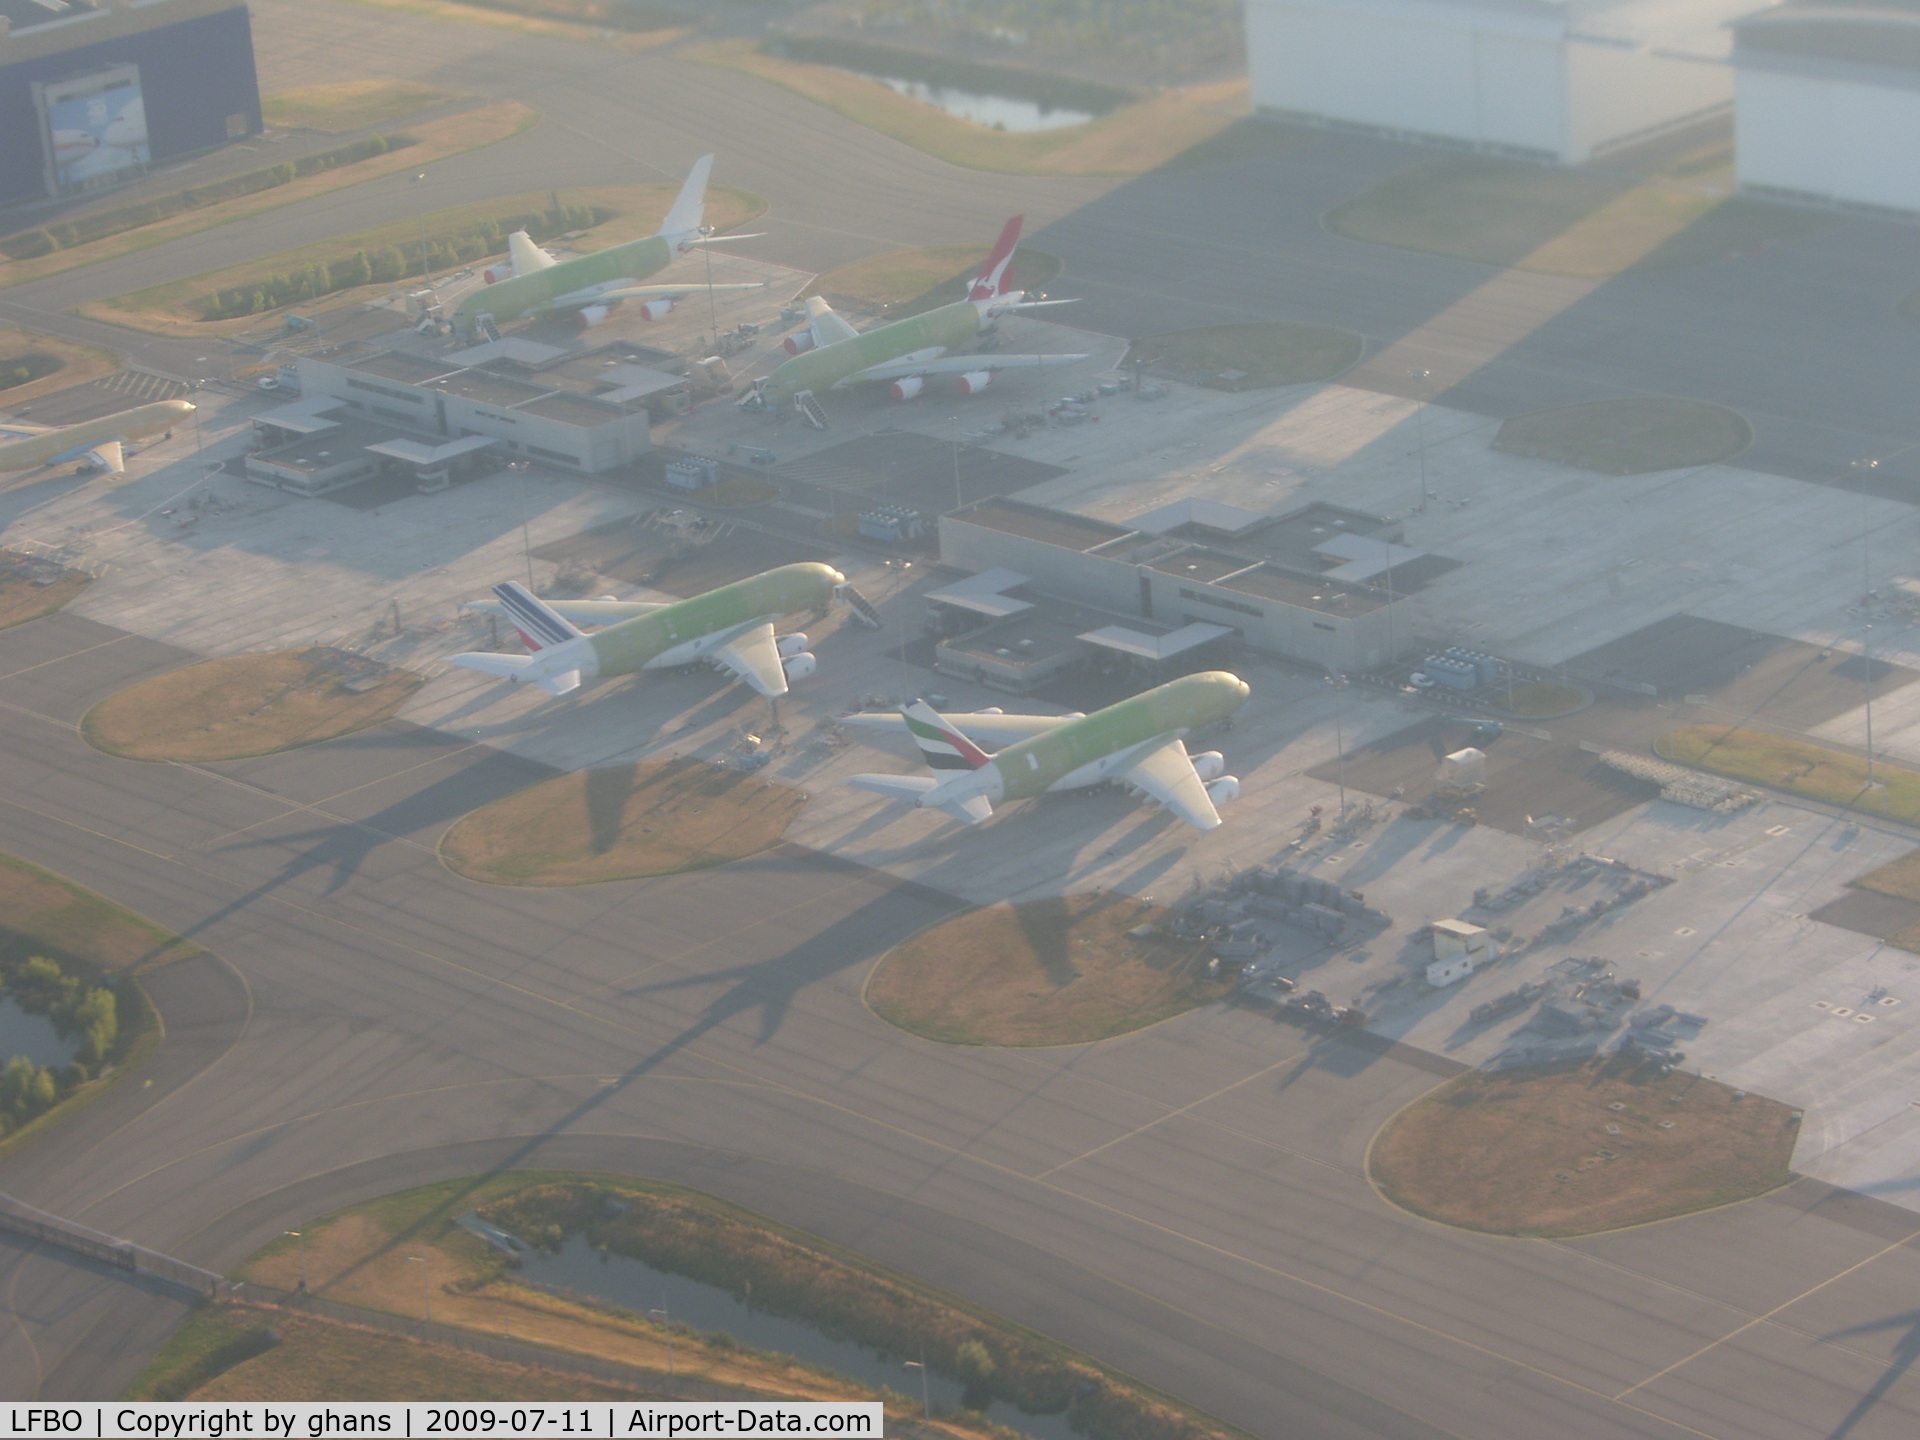 Toulouse Airport, Blagnac Airport France (LFBO) - A380 plant